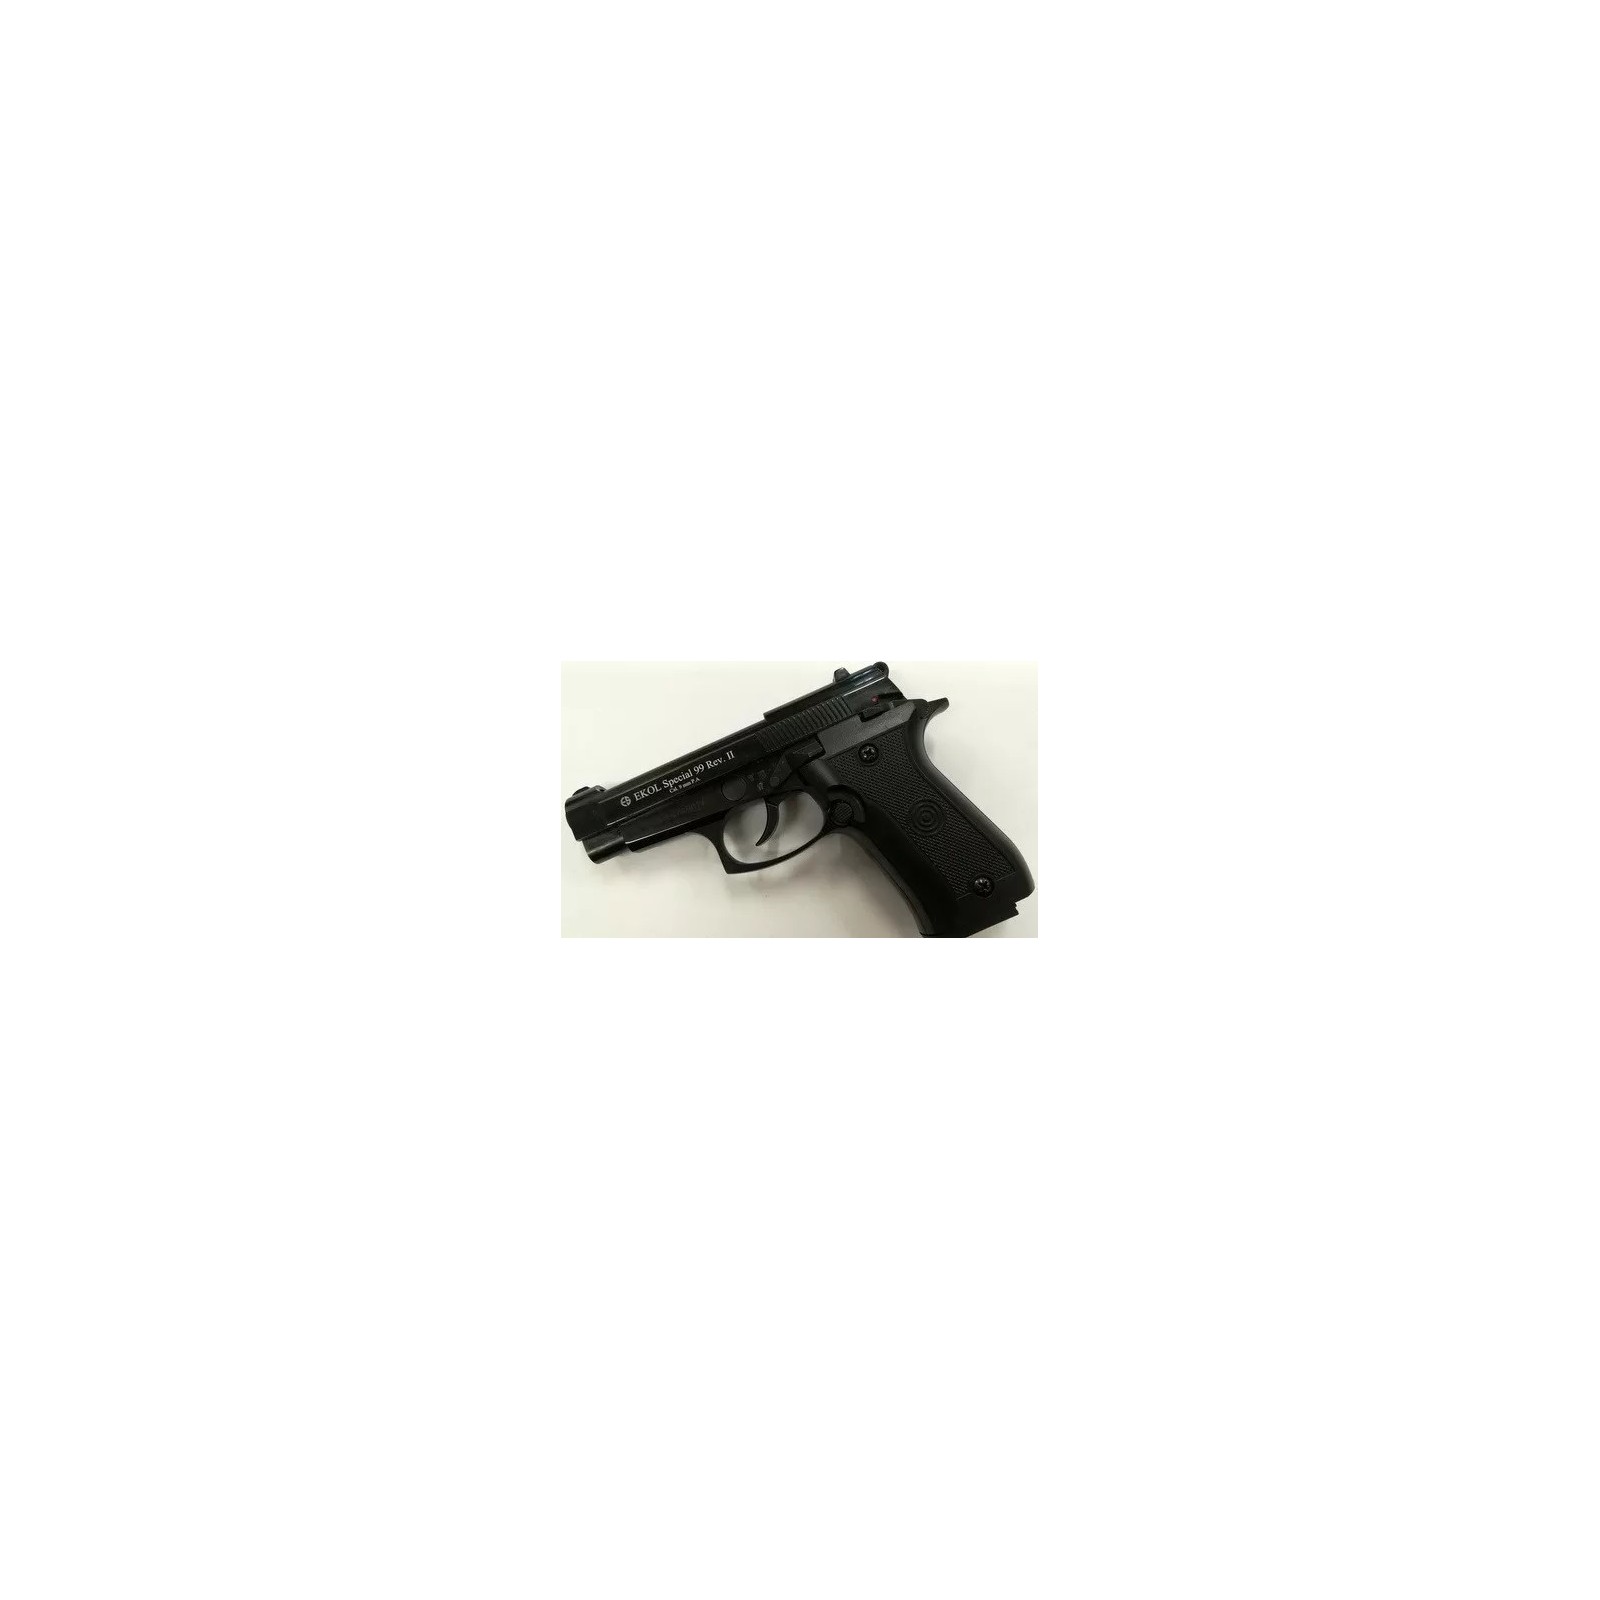 pistola traumatica ekol special99 rev-ll – tienda diamond 18k